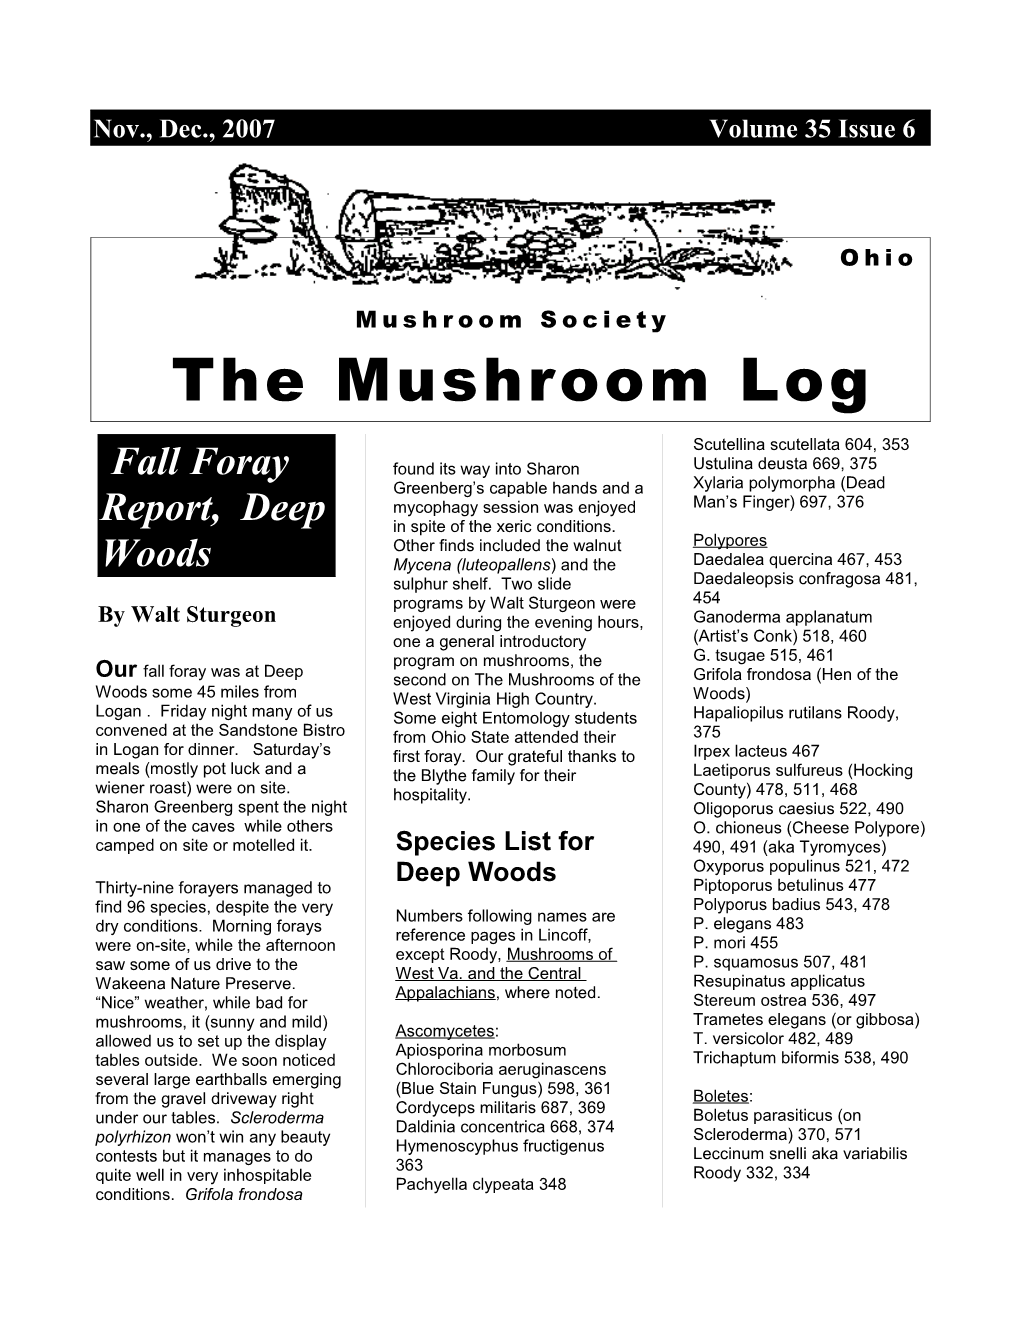 8 the Mushroom Log